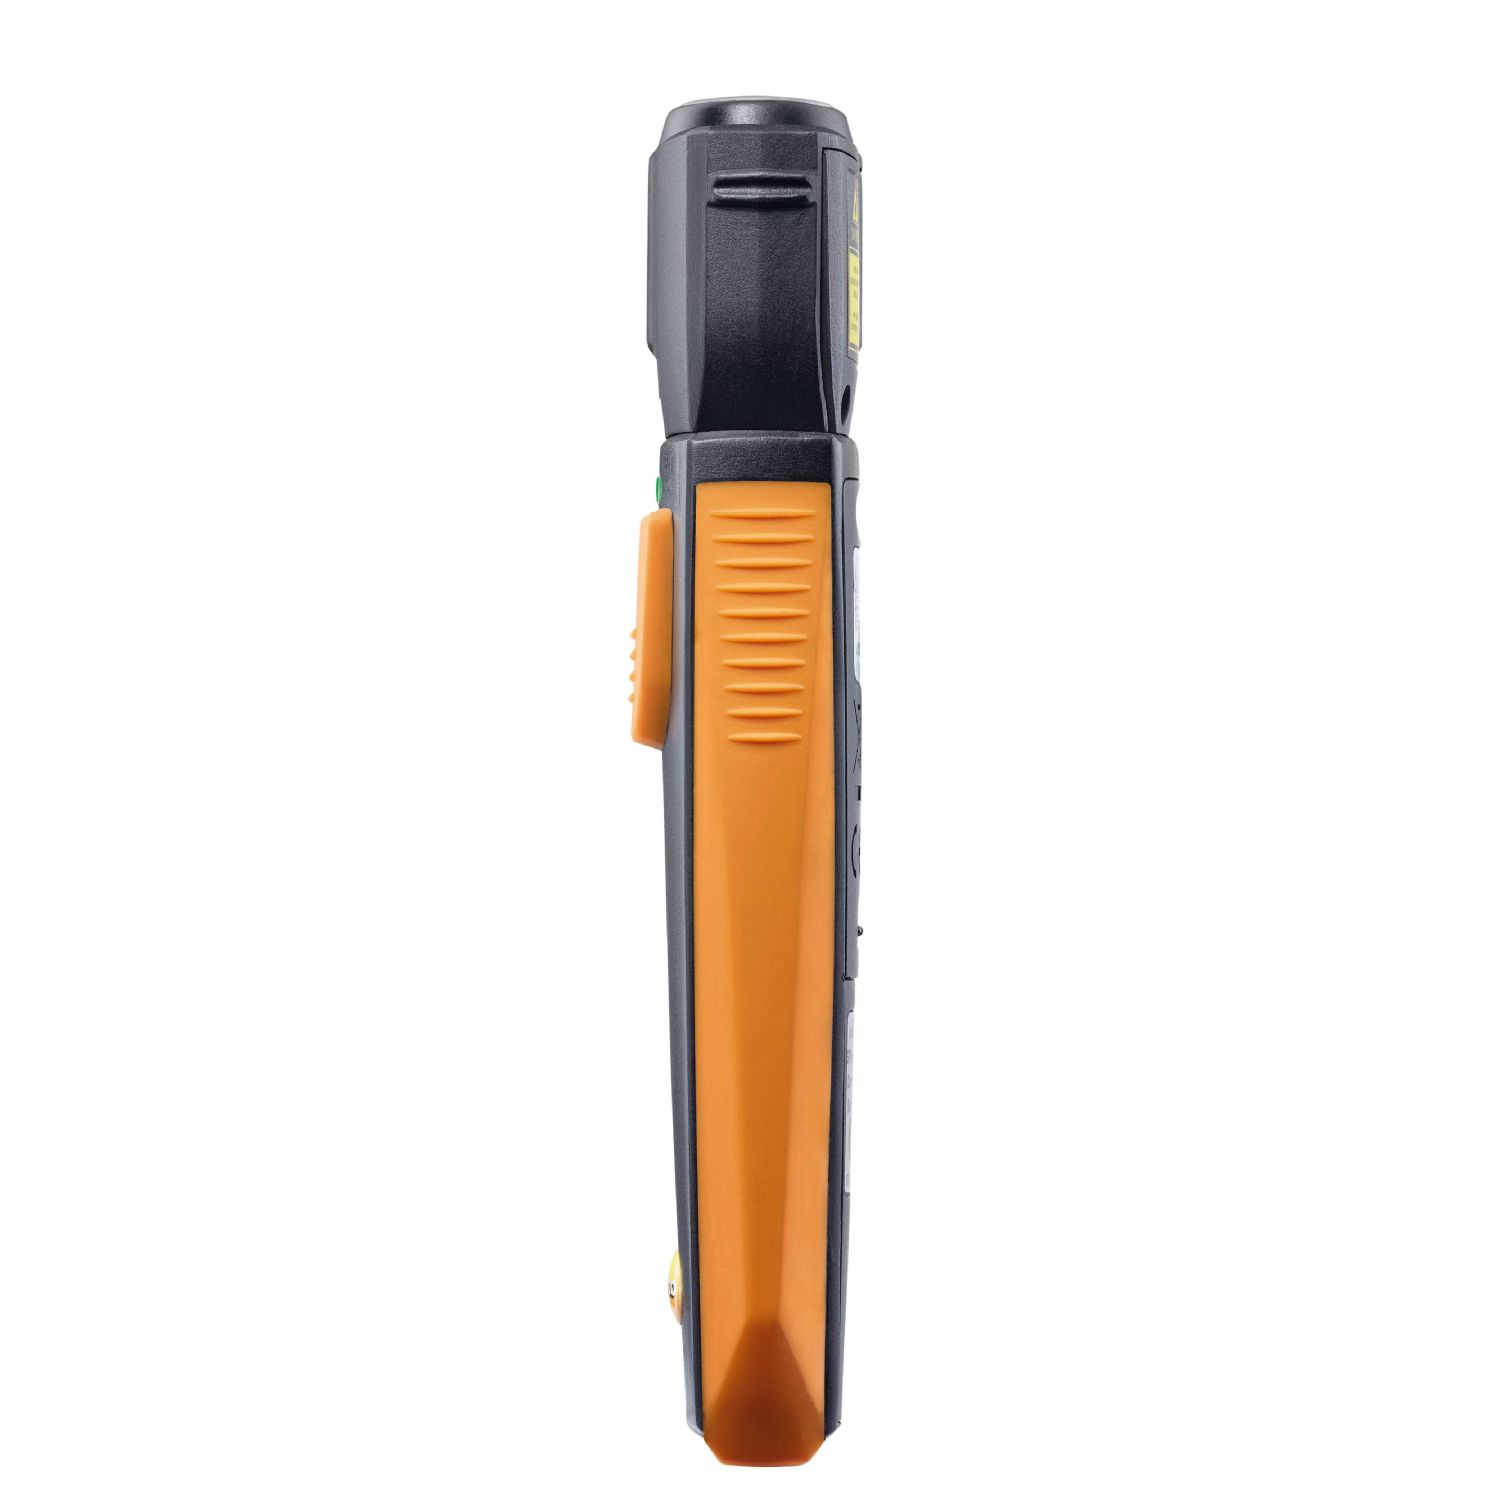 Testo 805 i - Infrarot-Thermometer mit Smartphone-Bedienung - 0560 1805